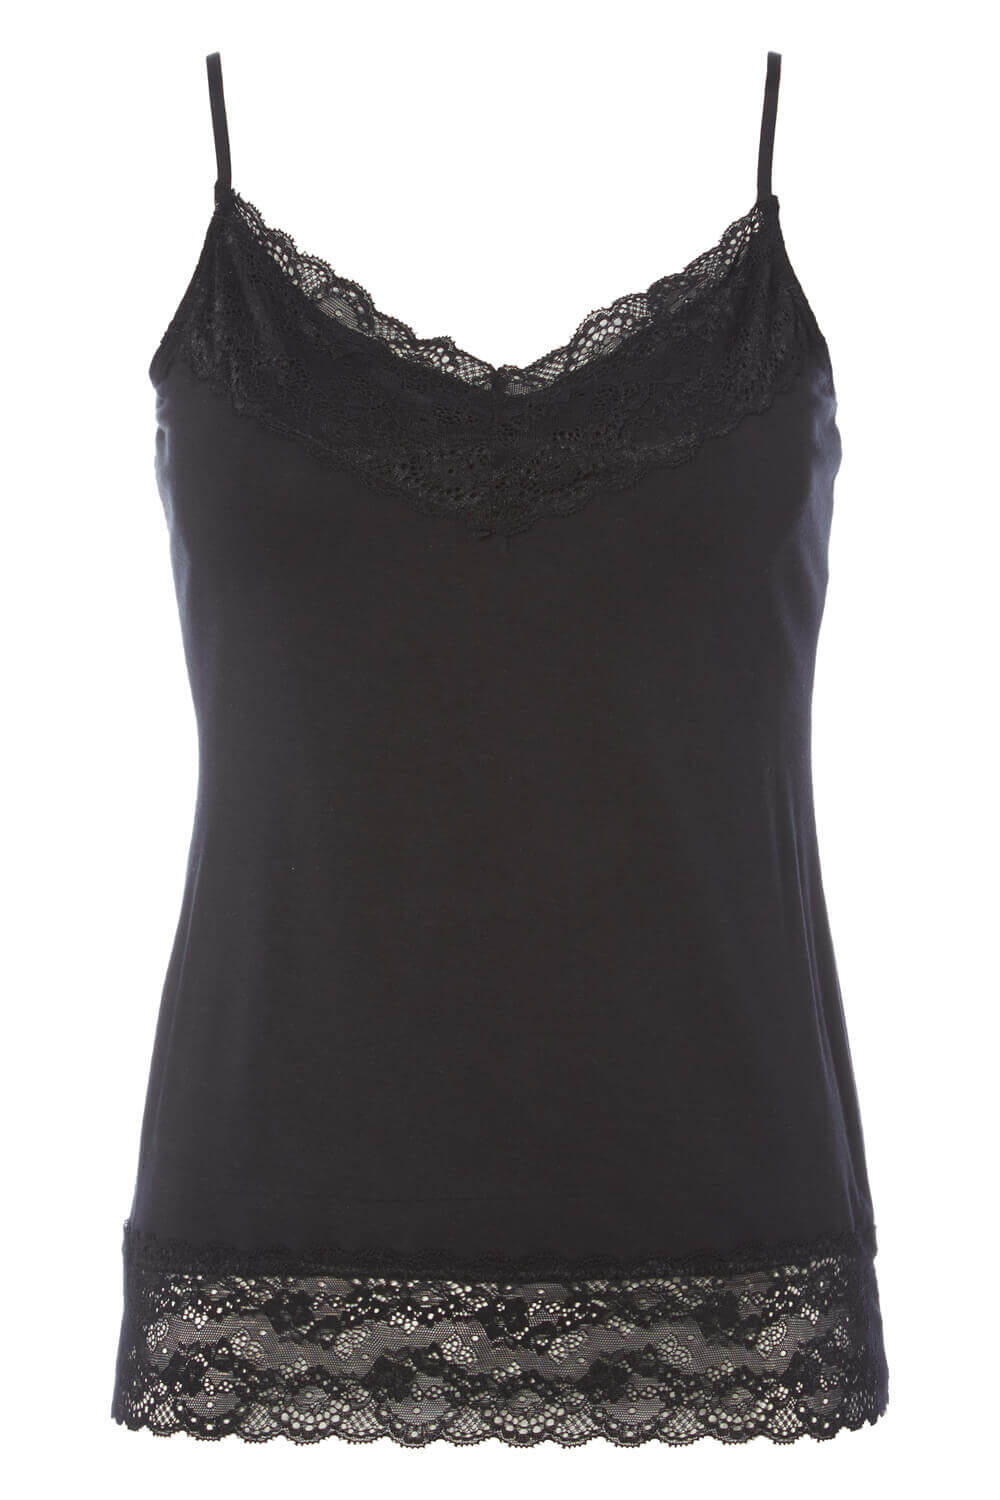 Black Lace Trim Camisole Top, Image 4 of 8